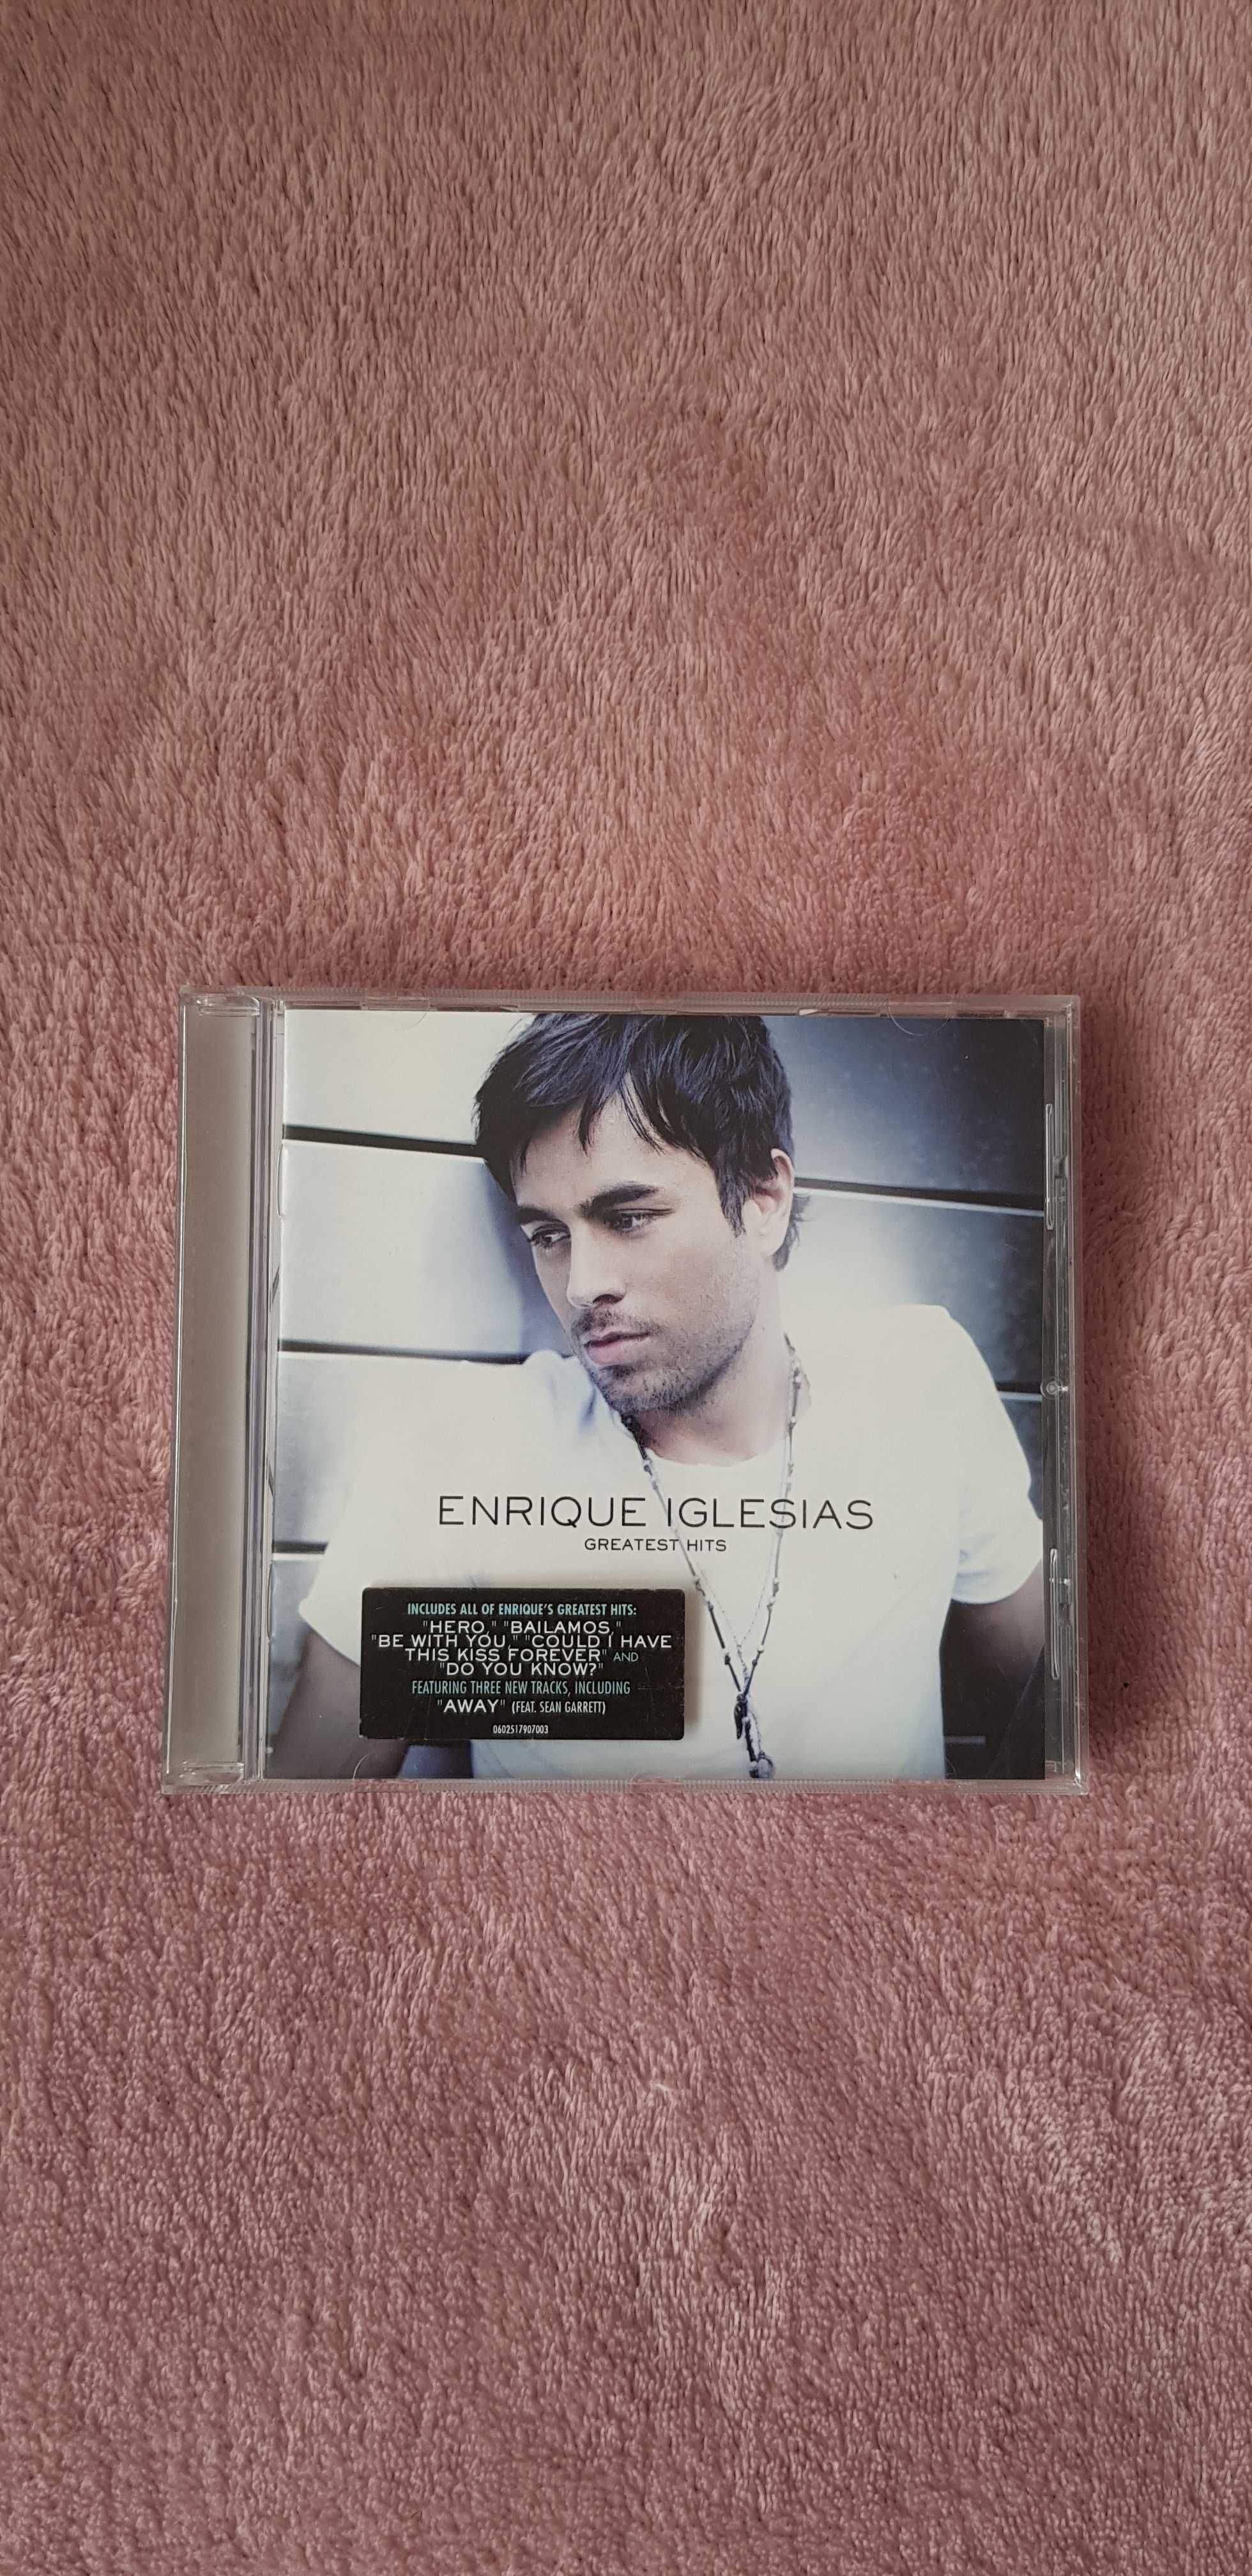 ALBUM CD "Greatest Hits" - Enrique Iglesias